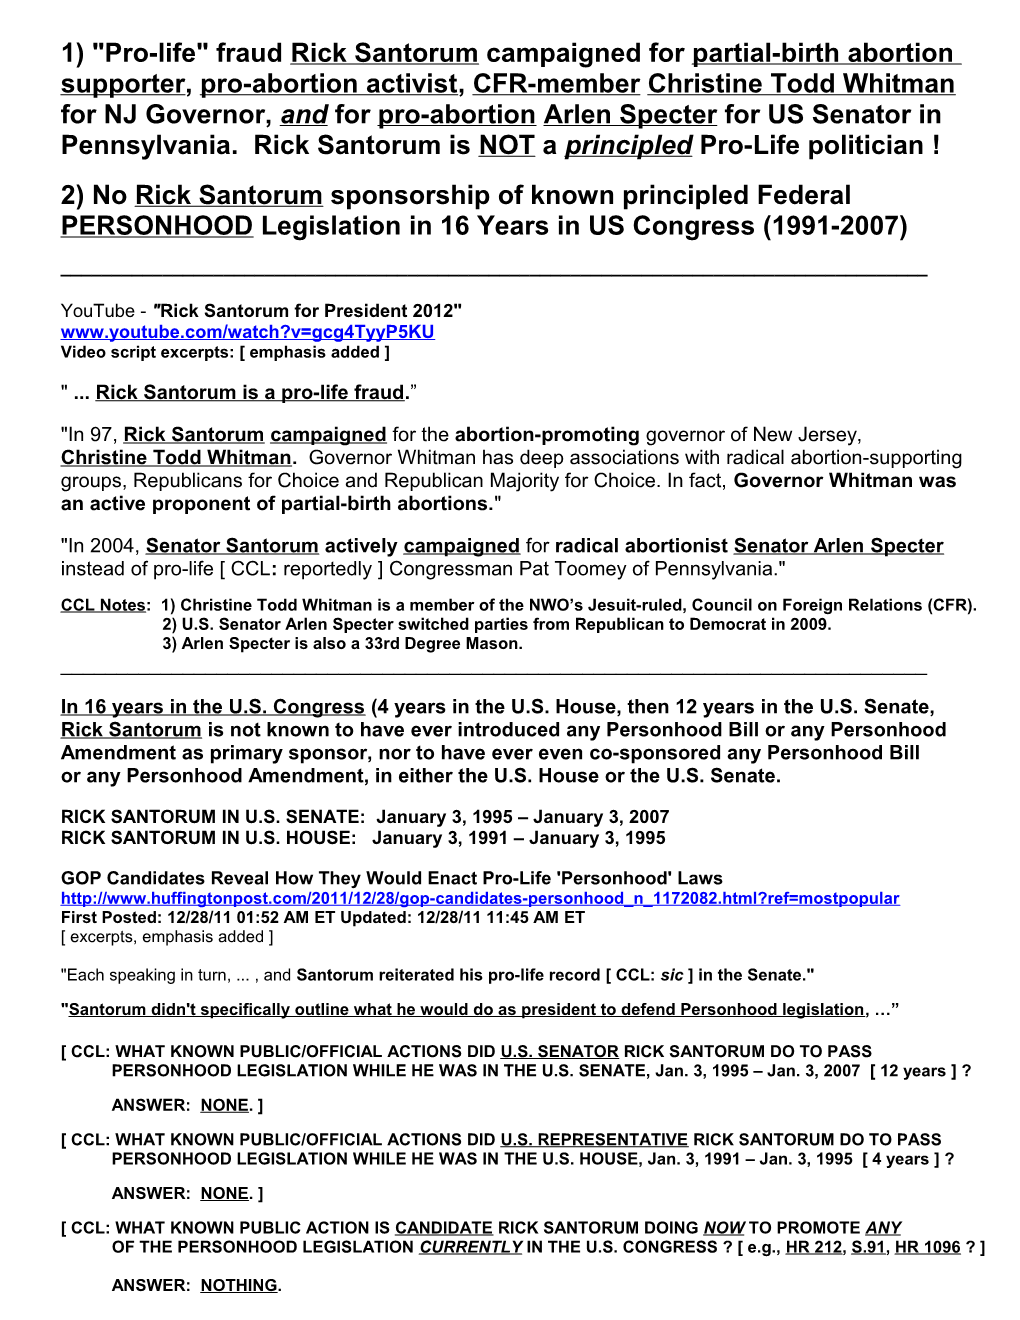 2) No Rick Santorum Sponsorship of Known Principled Federal PERSONHOOD Legislation In